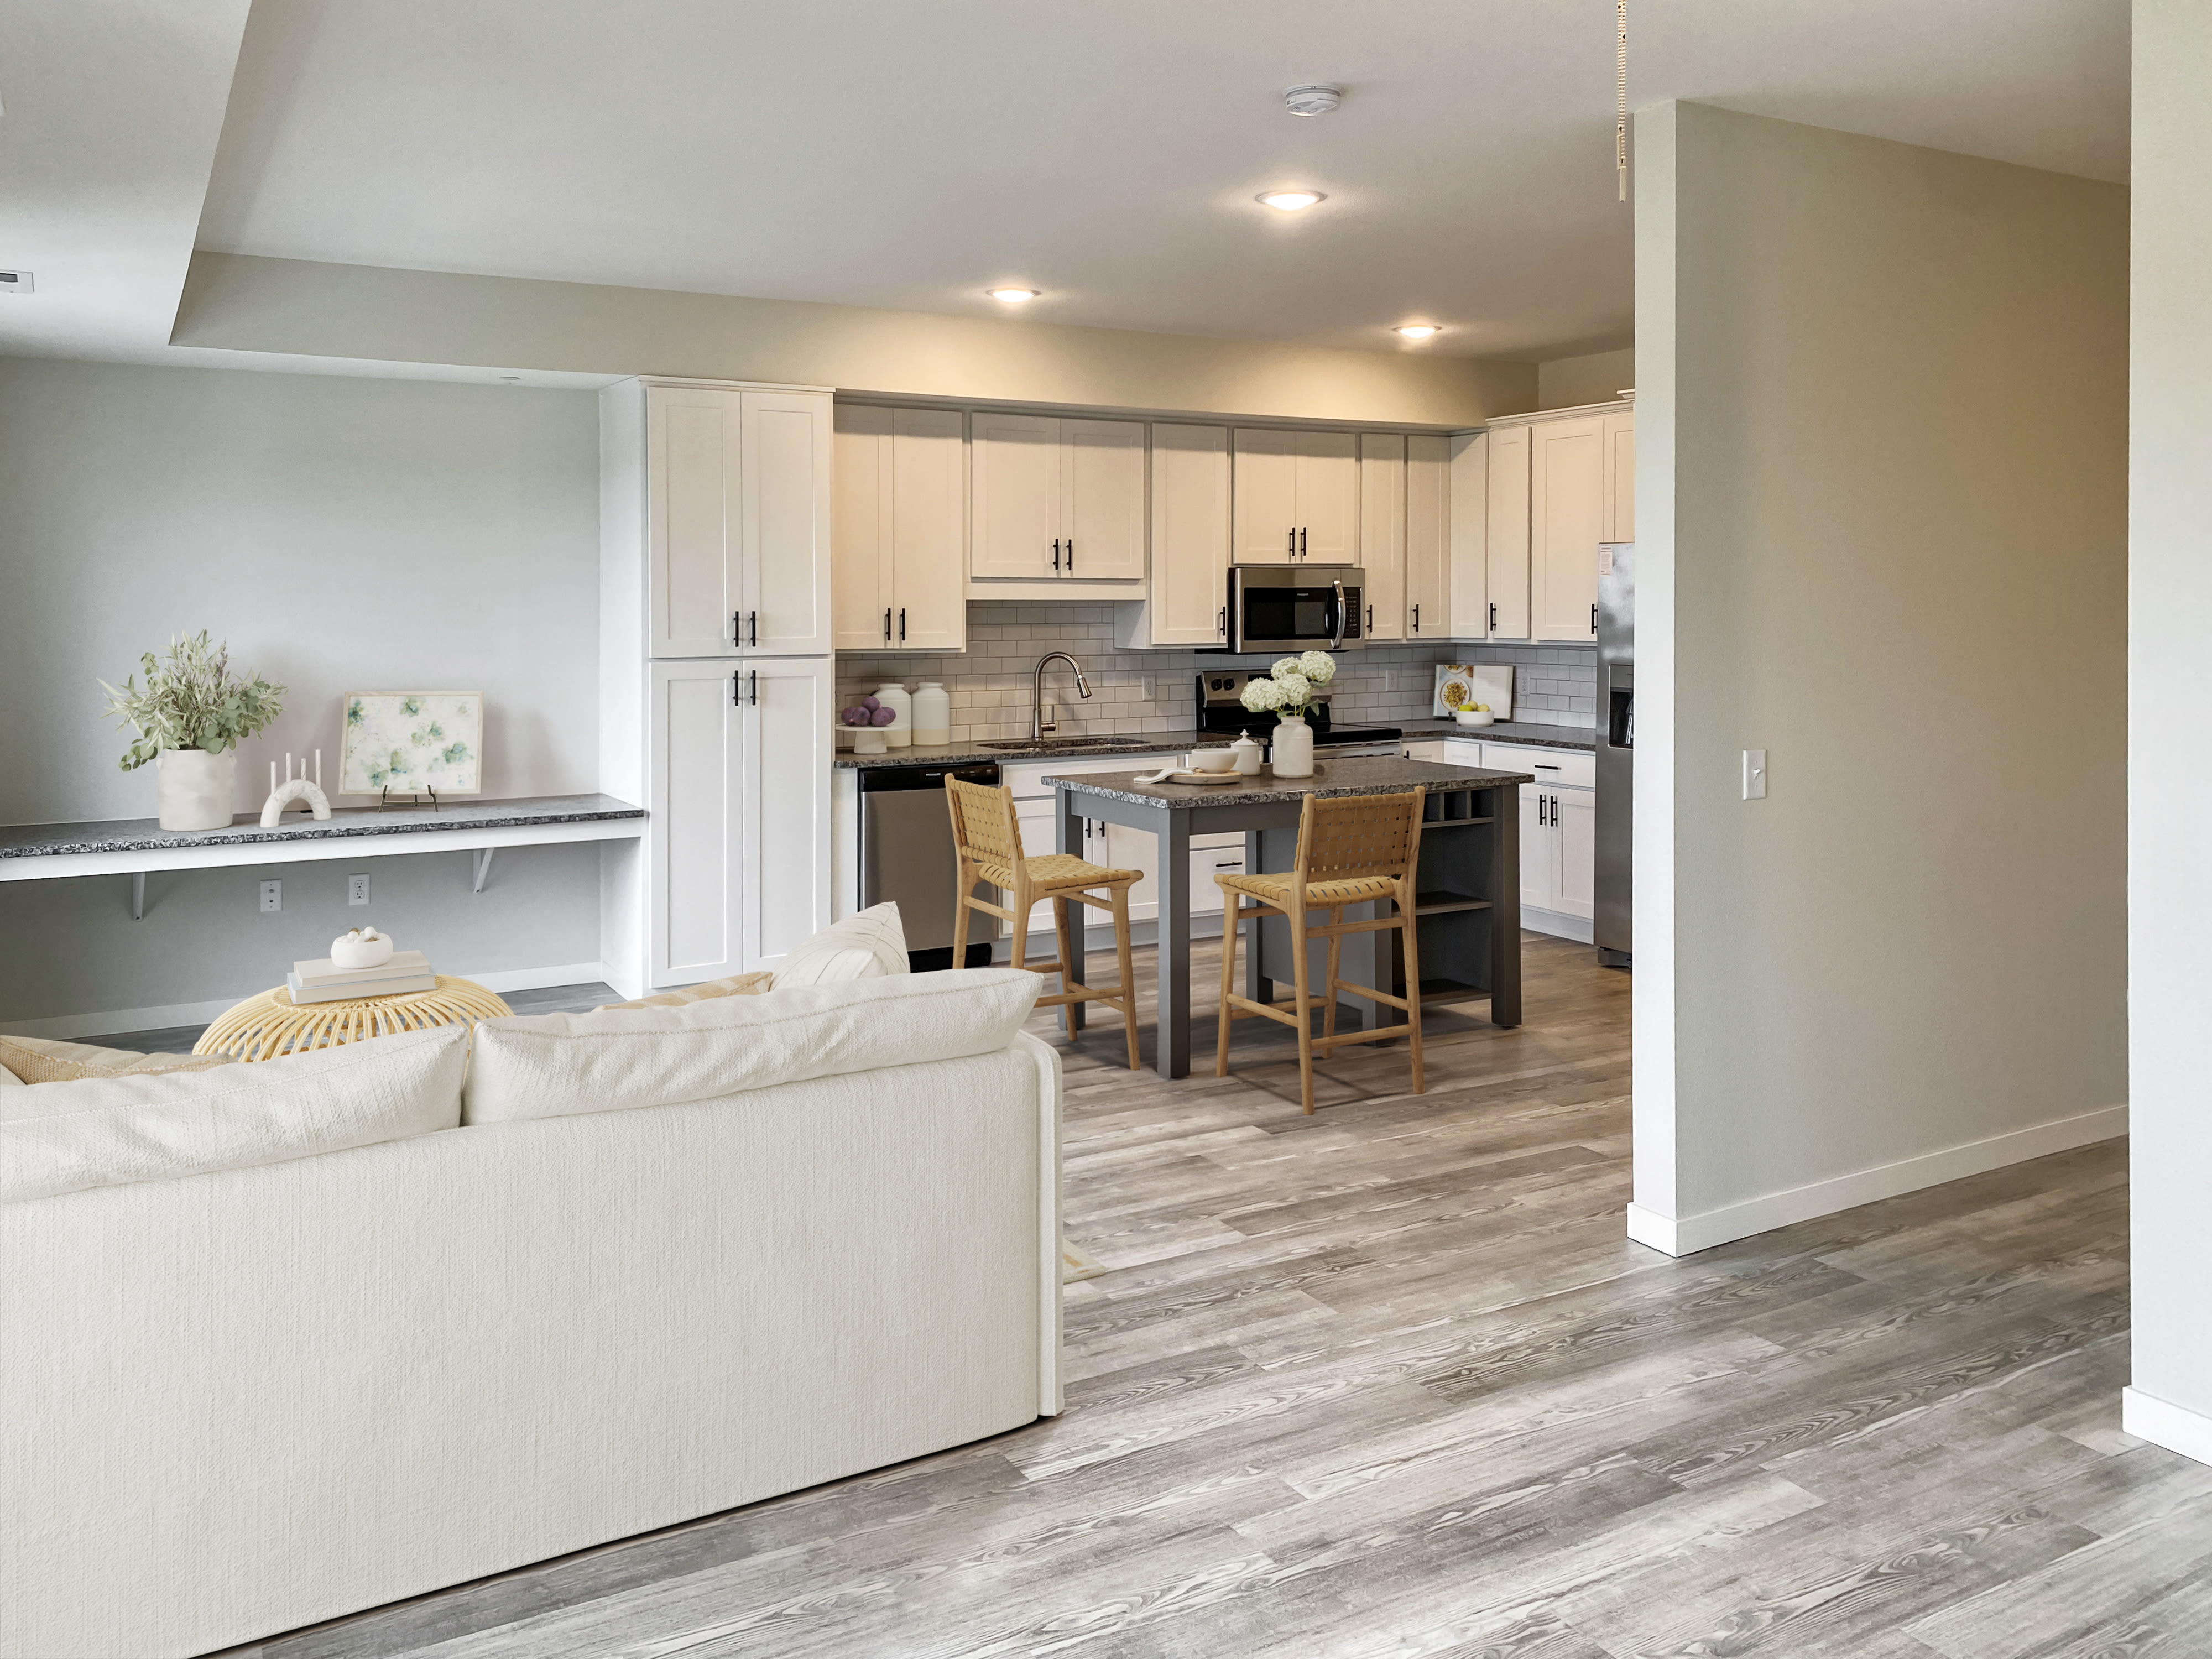 Enjoy our modern apartments at Arasan Apartments in Shakopee, Minnesota